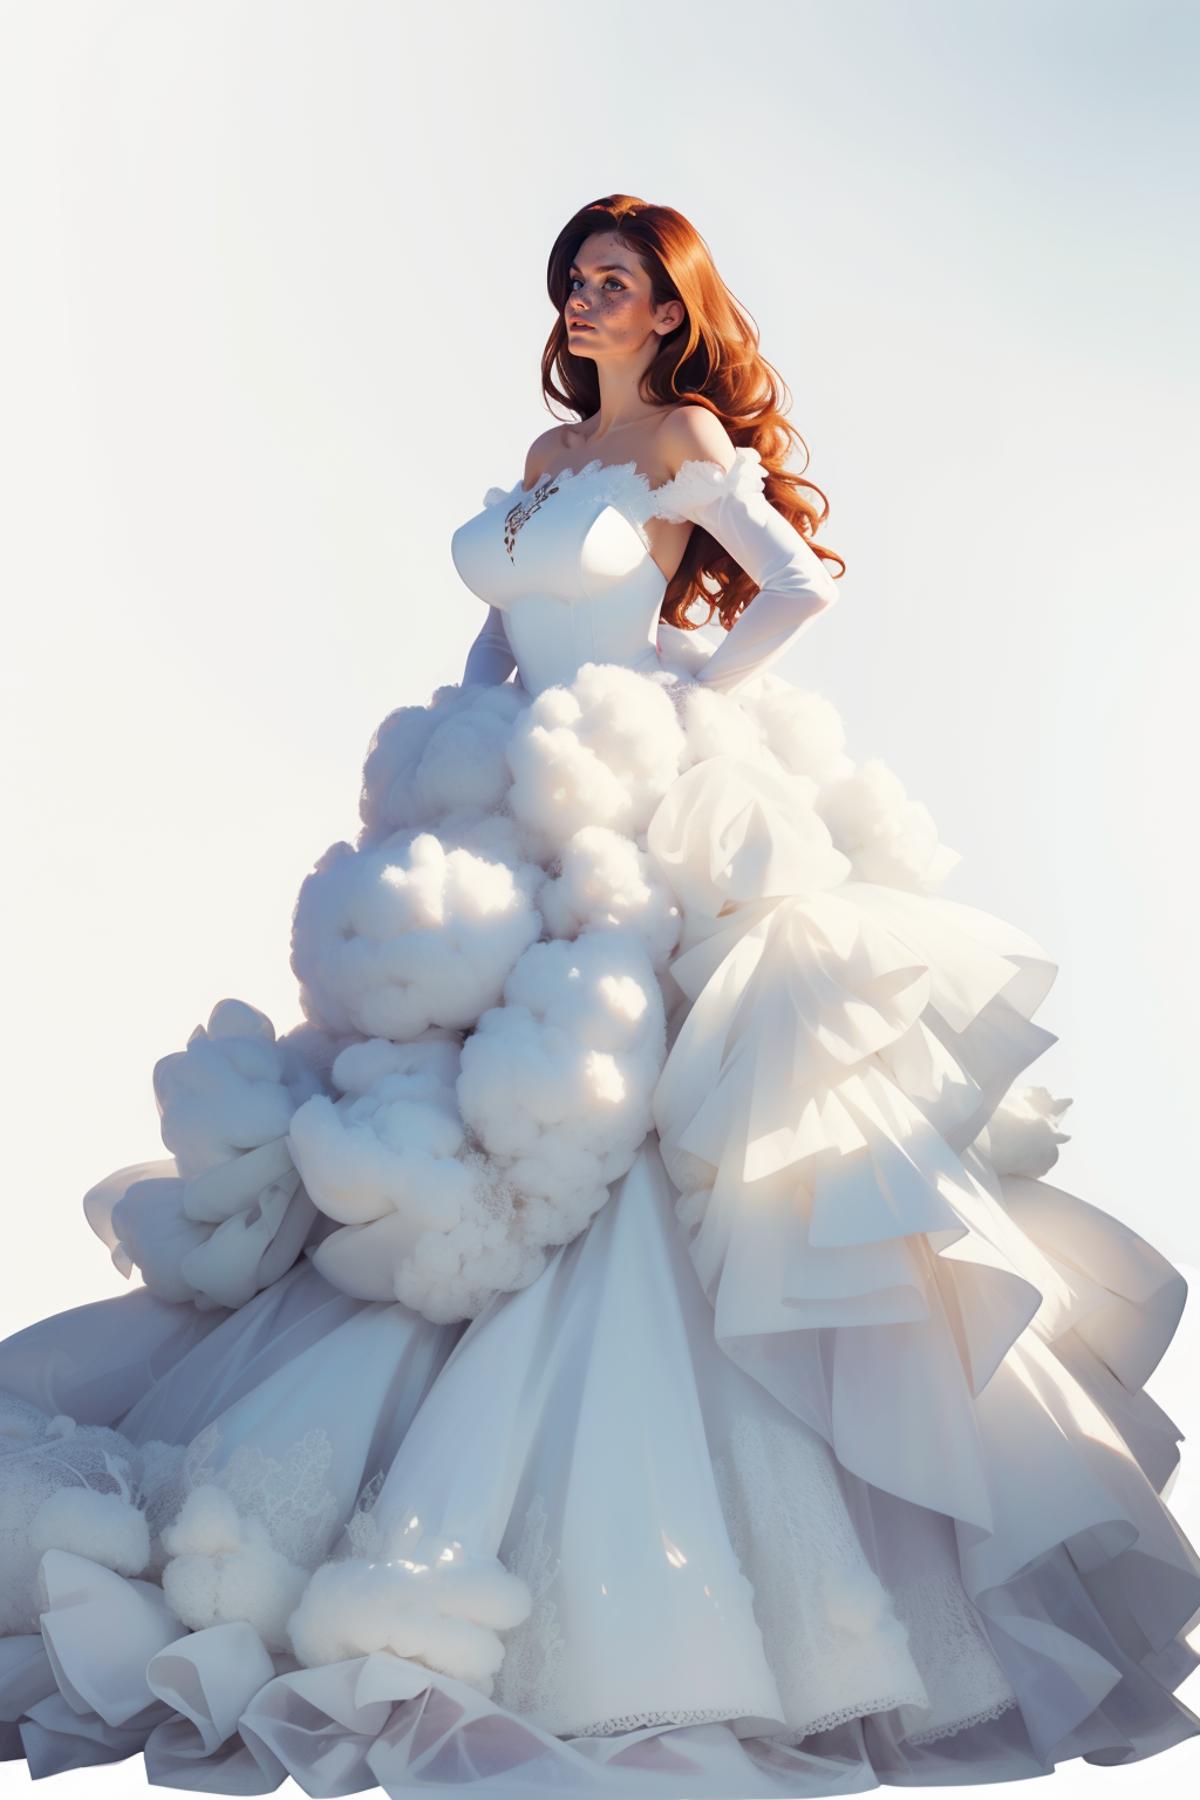 Cloud Dress image by freckledvixon